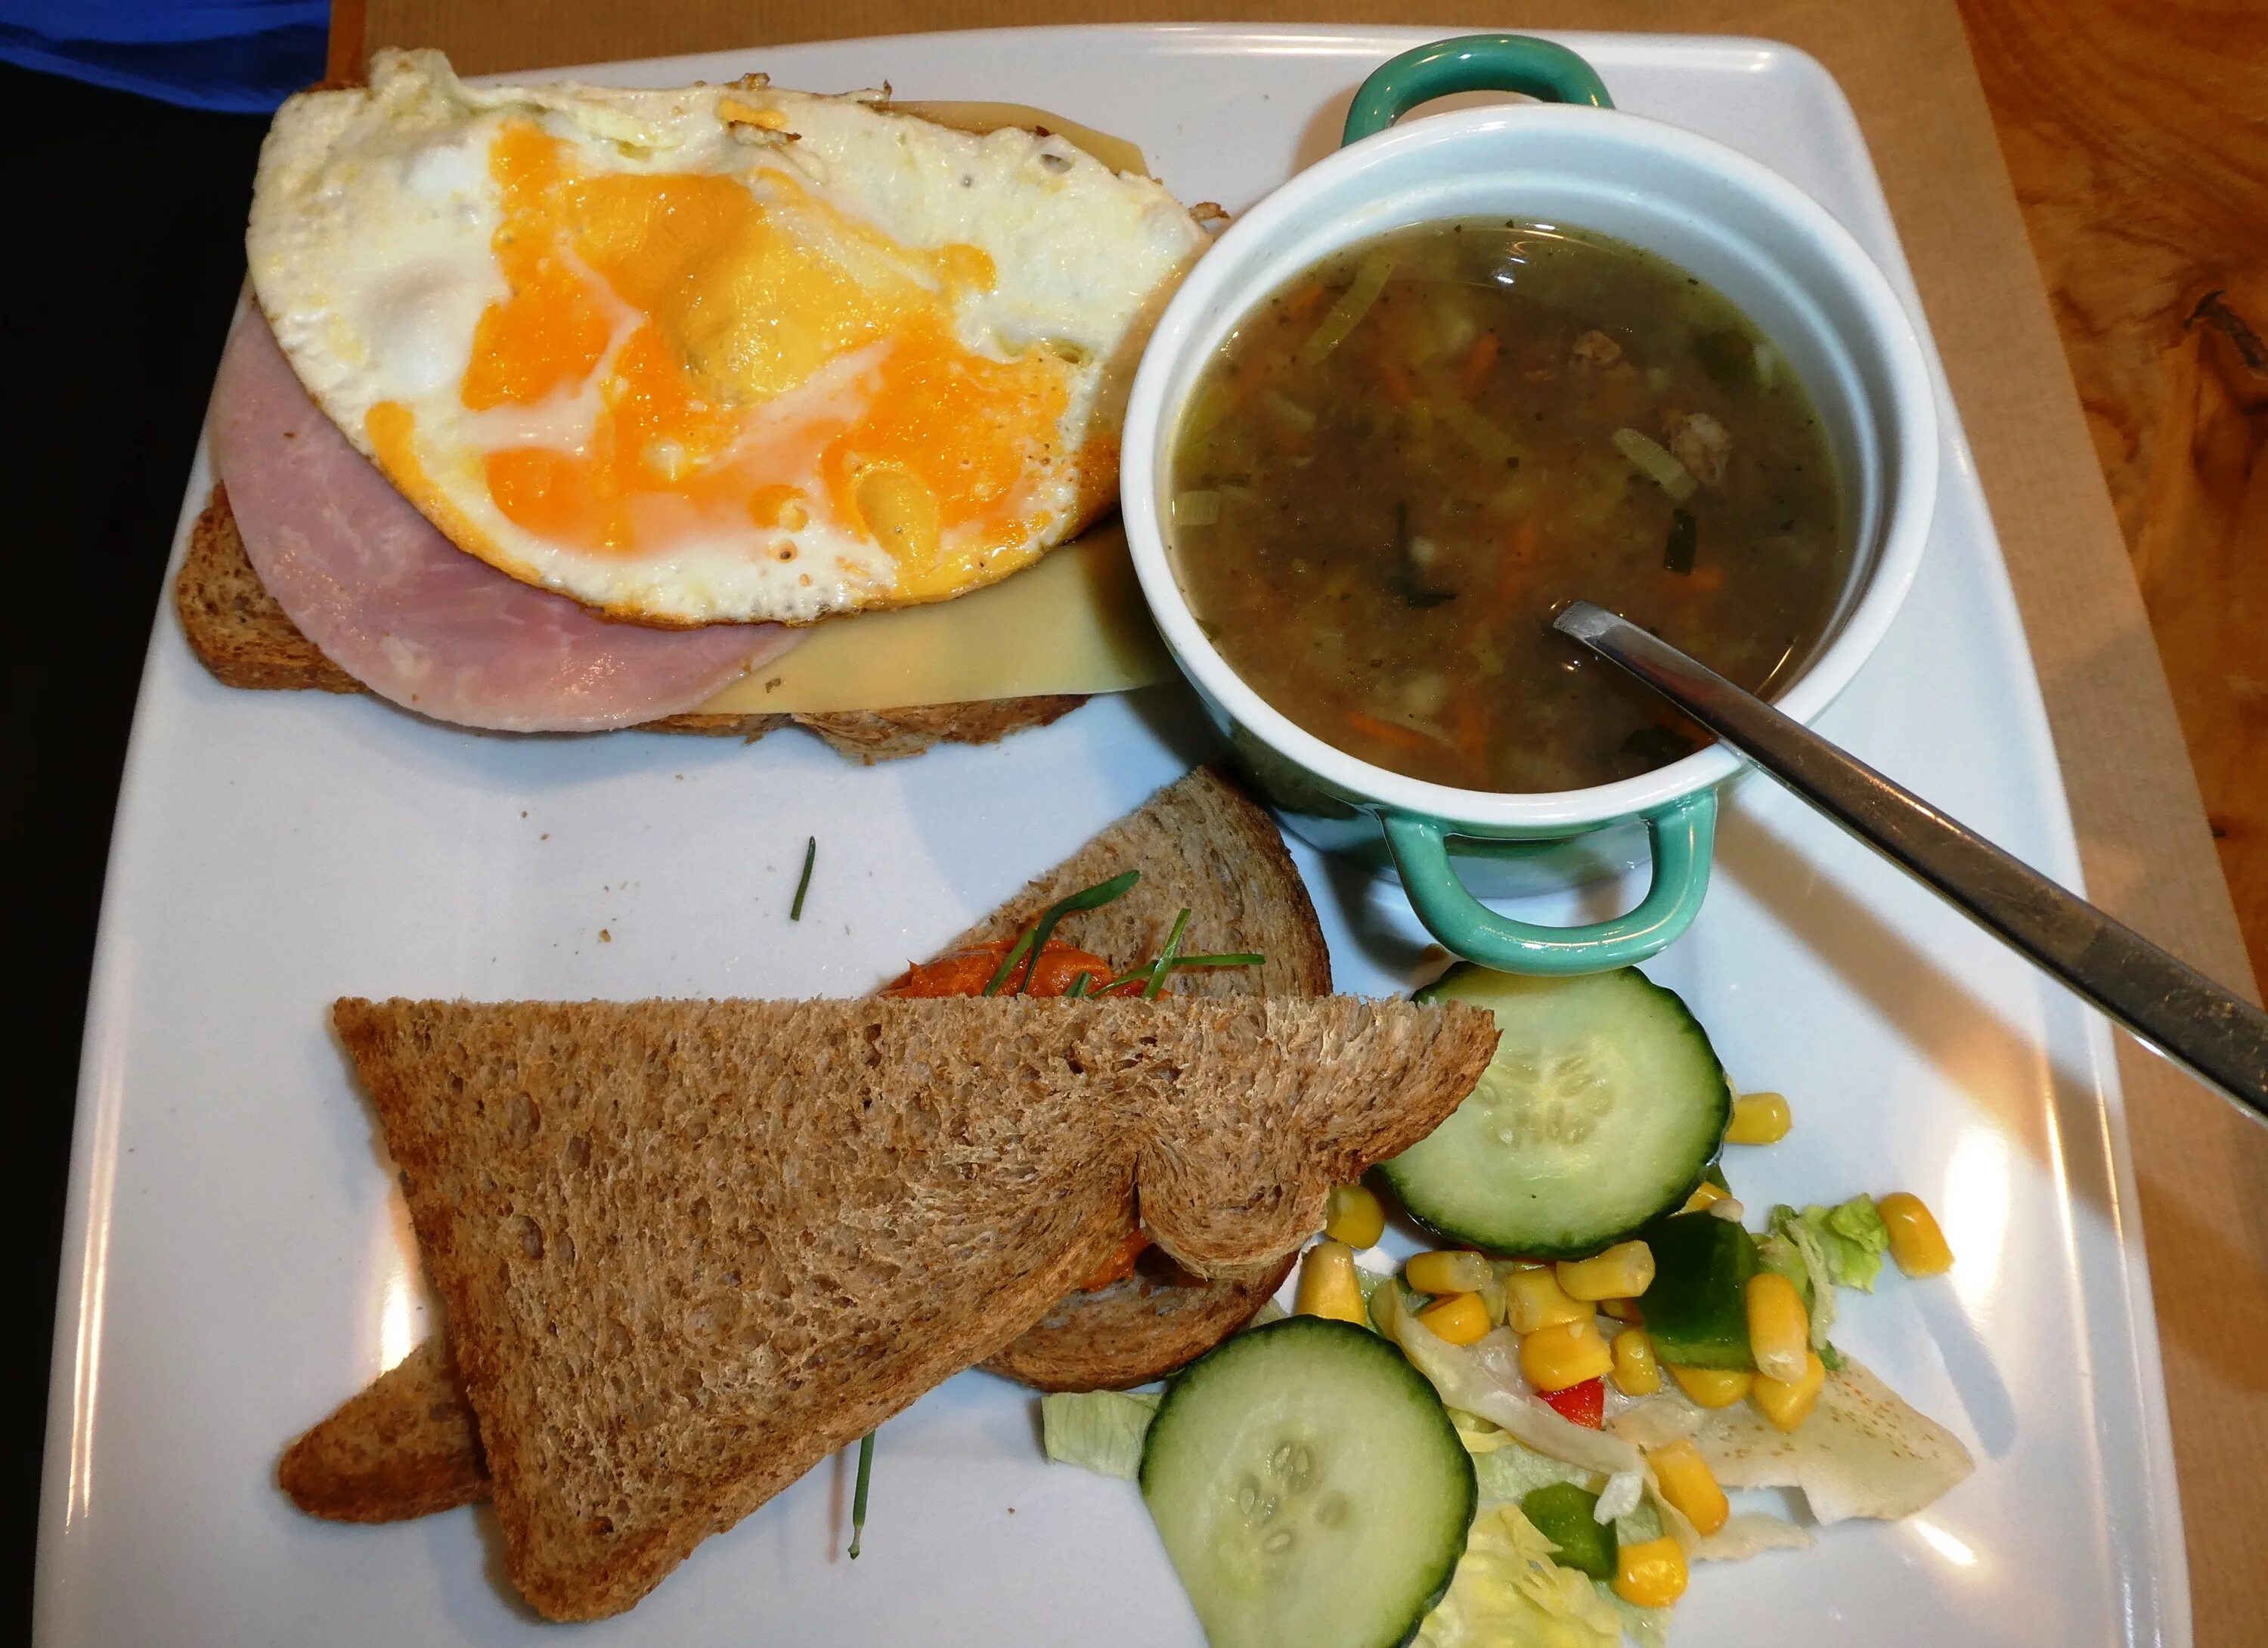 Обед картинки. Суп в хлебе. Обед из супа и бутербродов. Обед на работе. Завтрак обед как называется